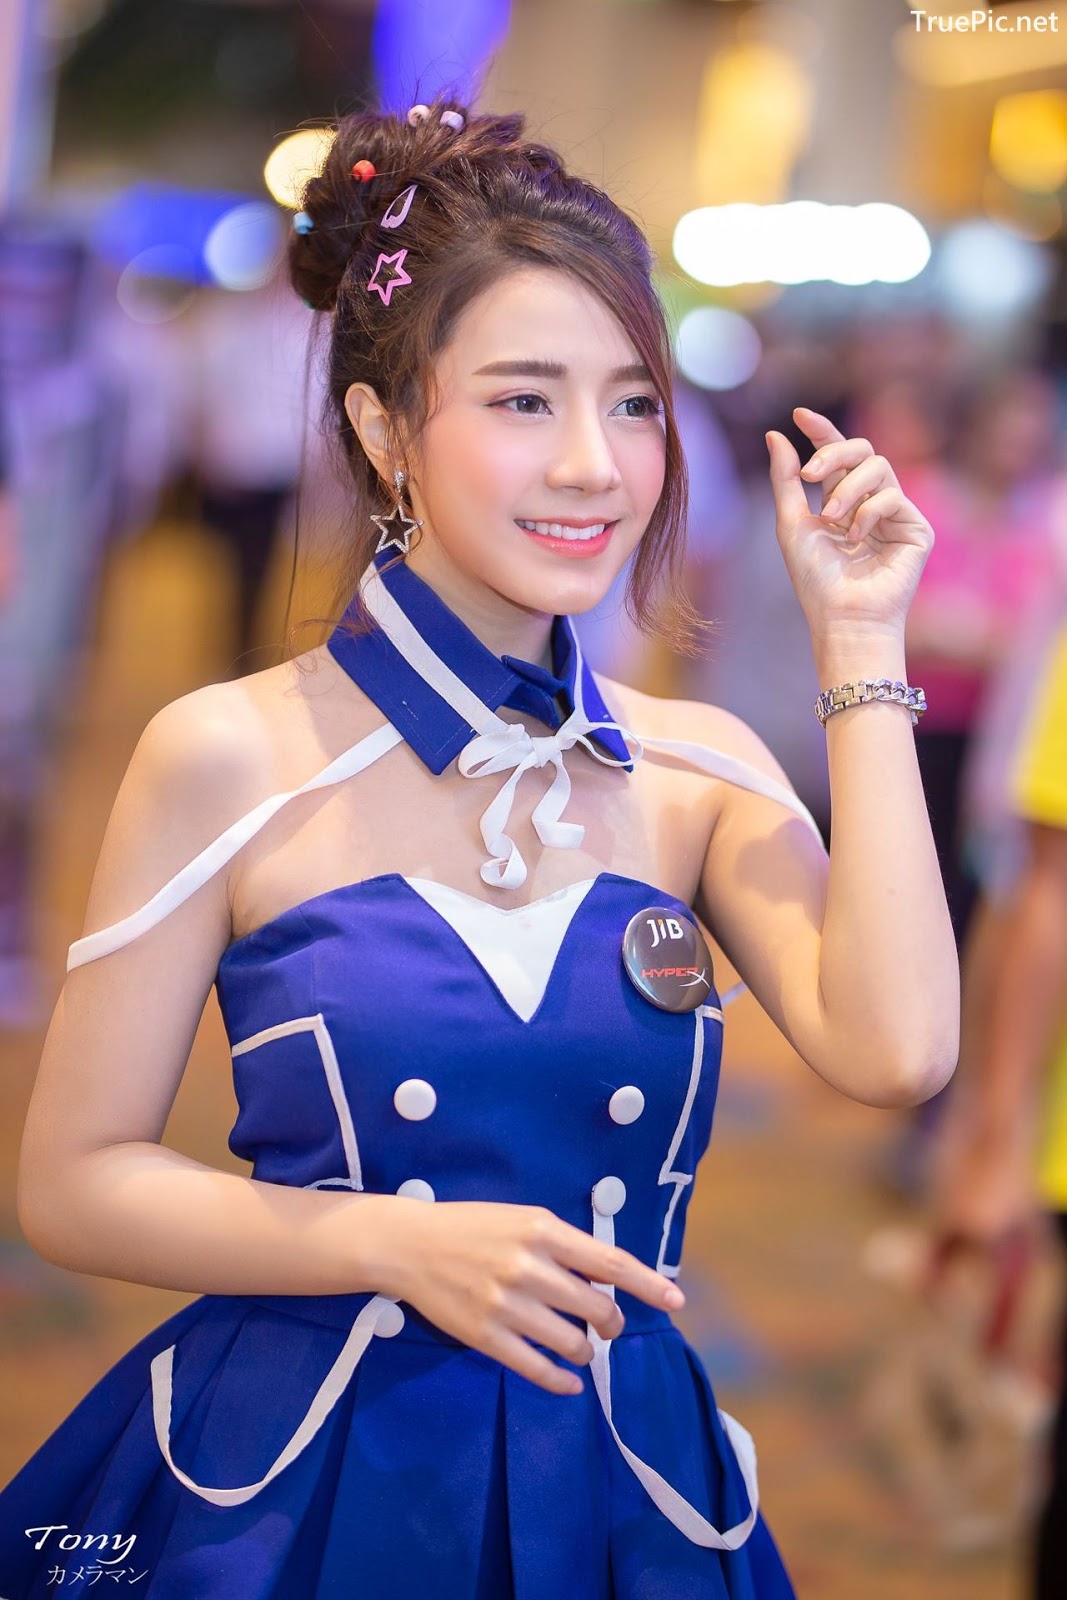 Image-Thailand-Hot-Model-Thai-PG-At-Commart-2018-TruePic.net- Picture-51